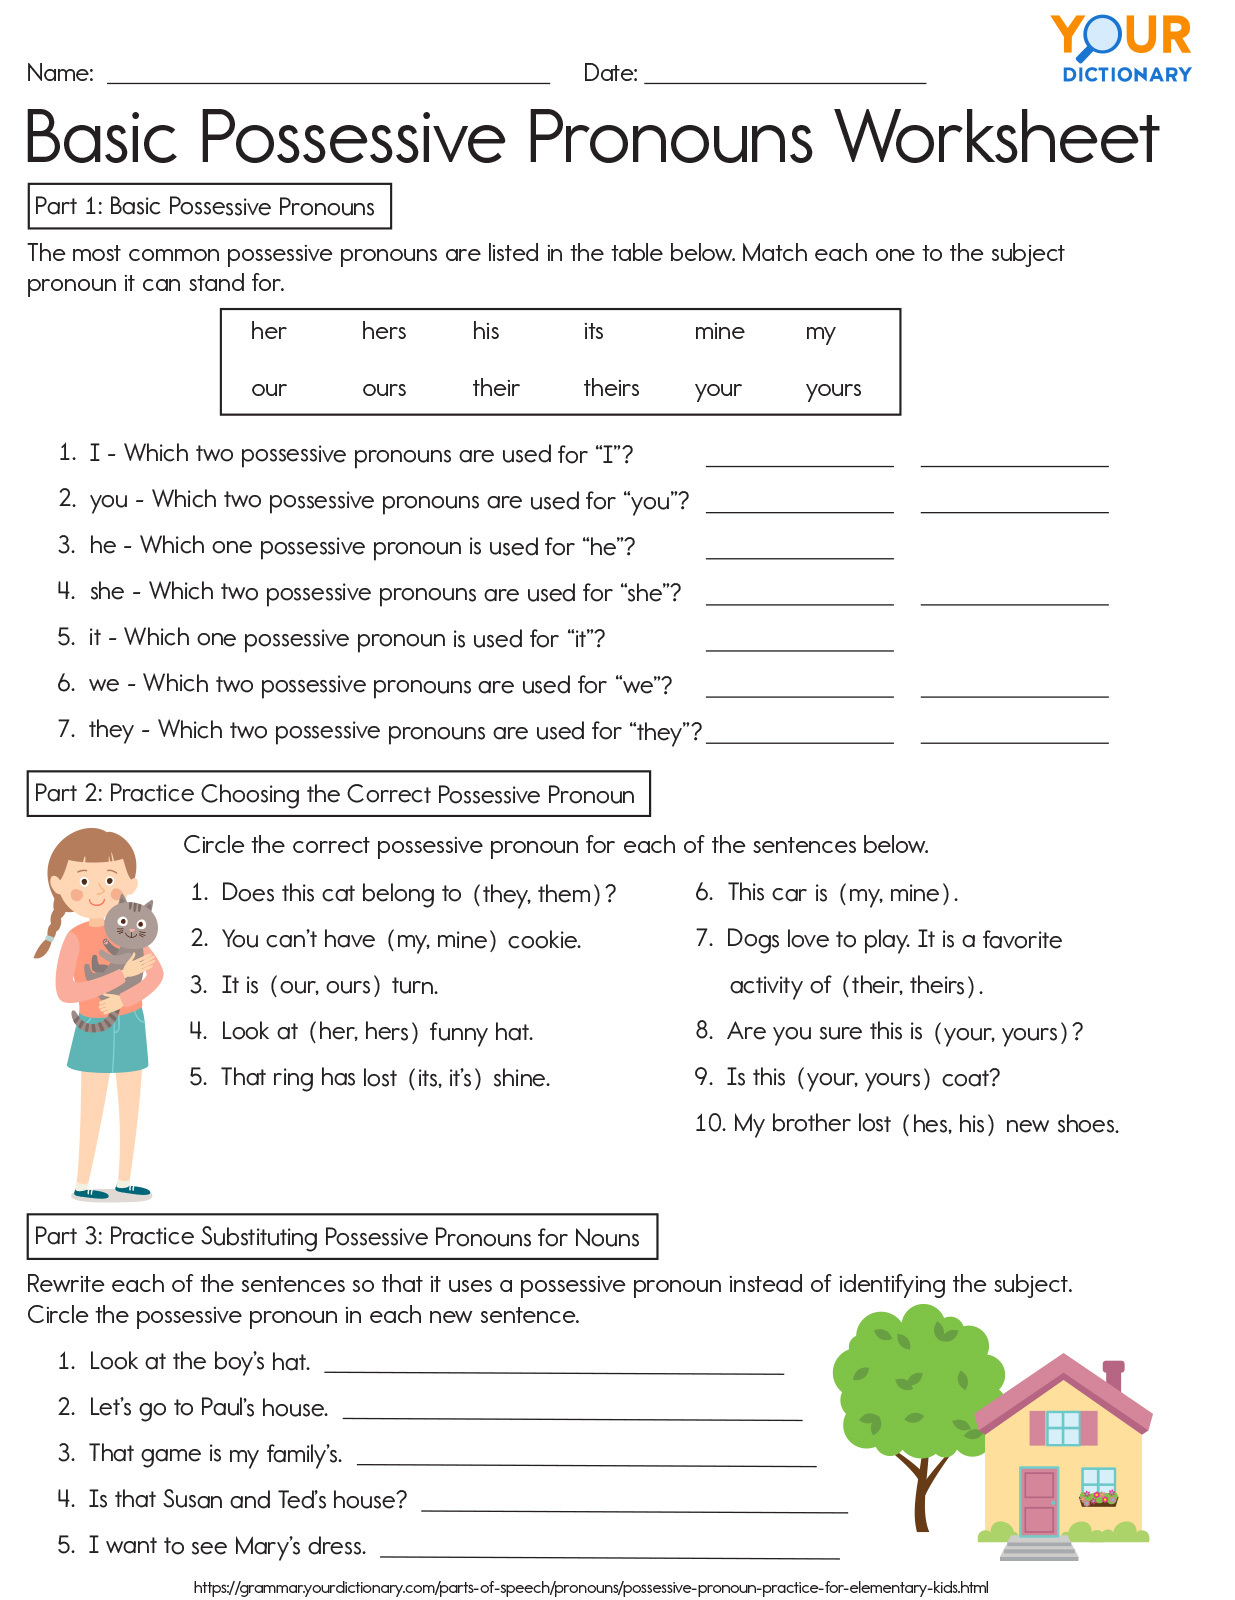 Possessive Pronouns Exercises For Kids Free Worksheet 